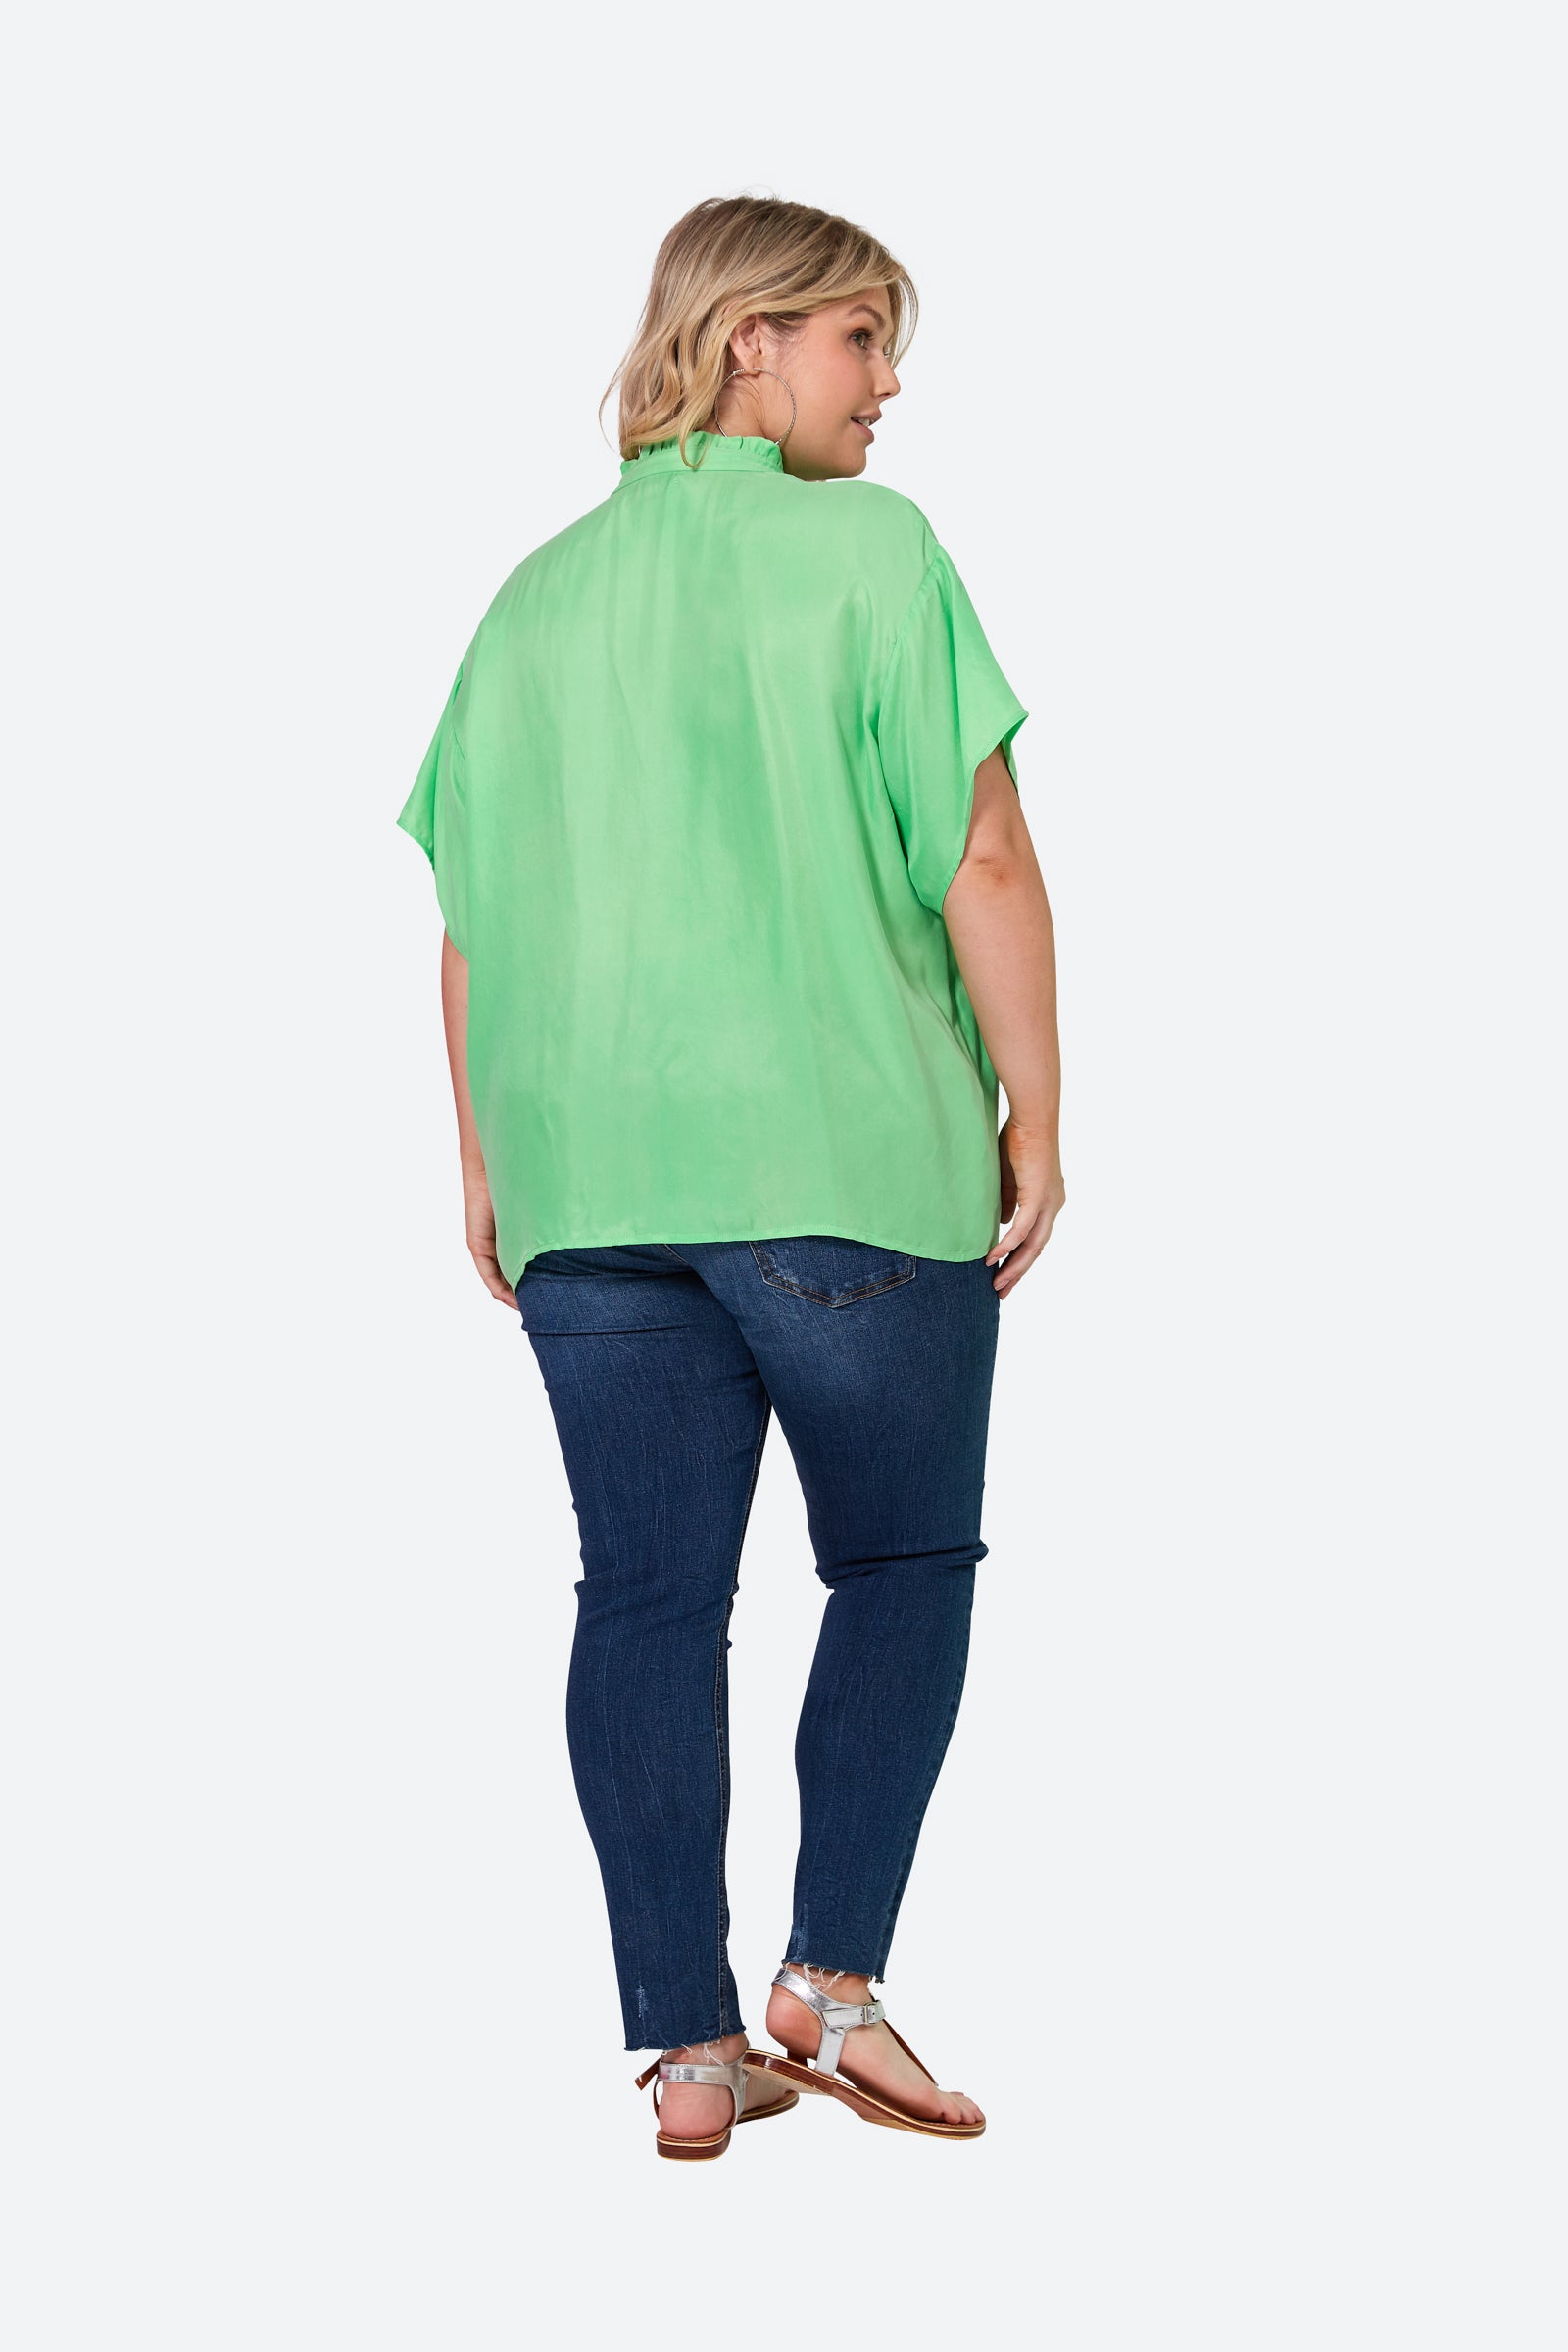 Elixir Shirt - Kiwi - eb&ive Clothing - Shirt S/S Cupro